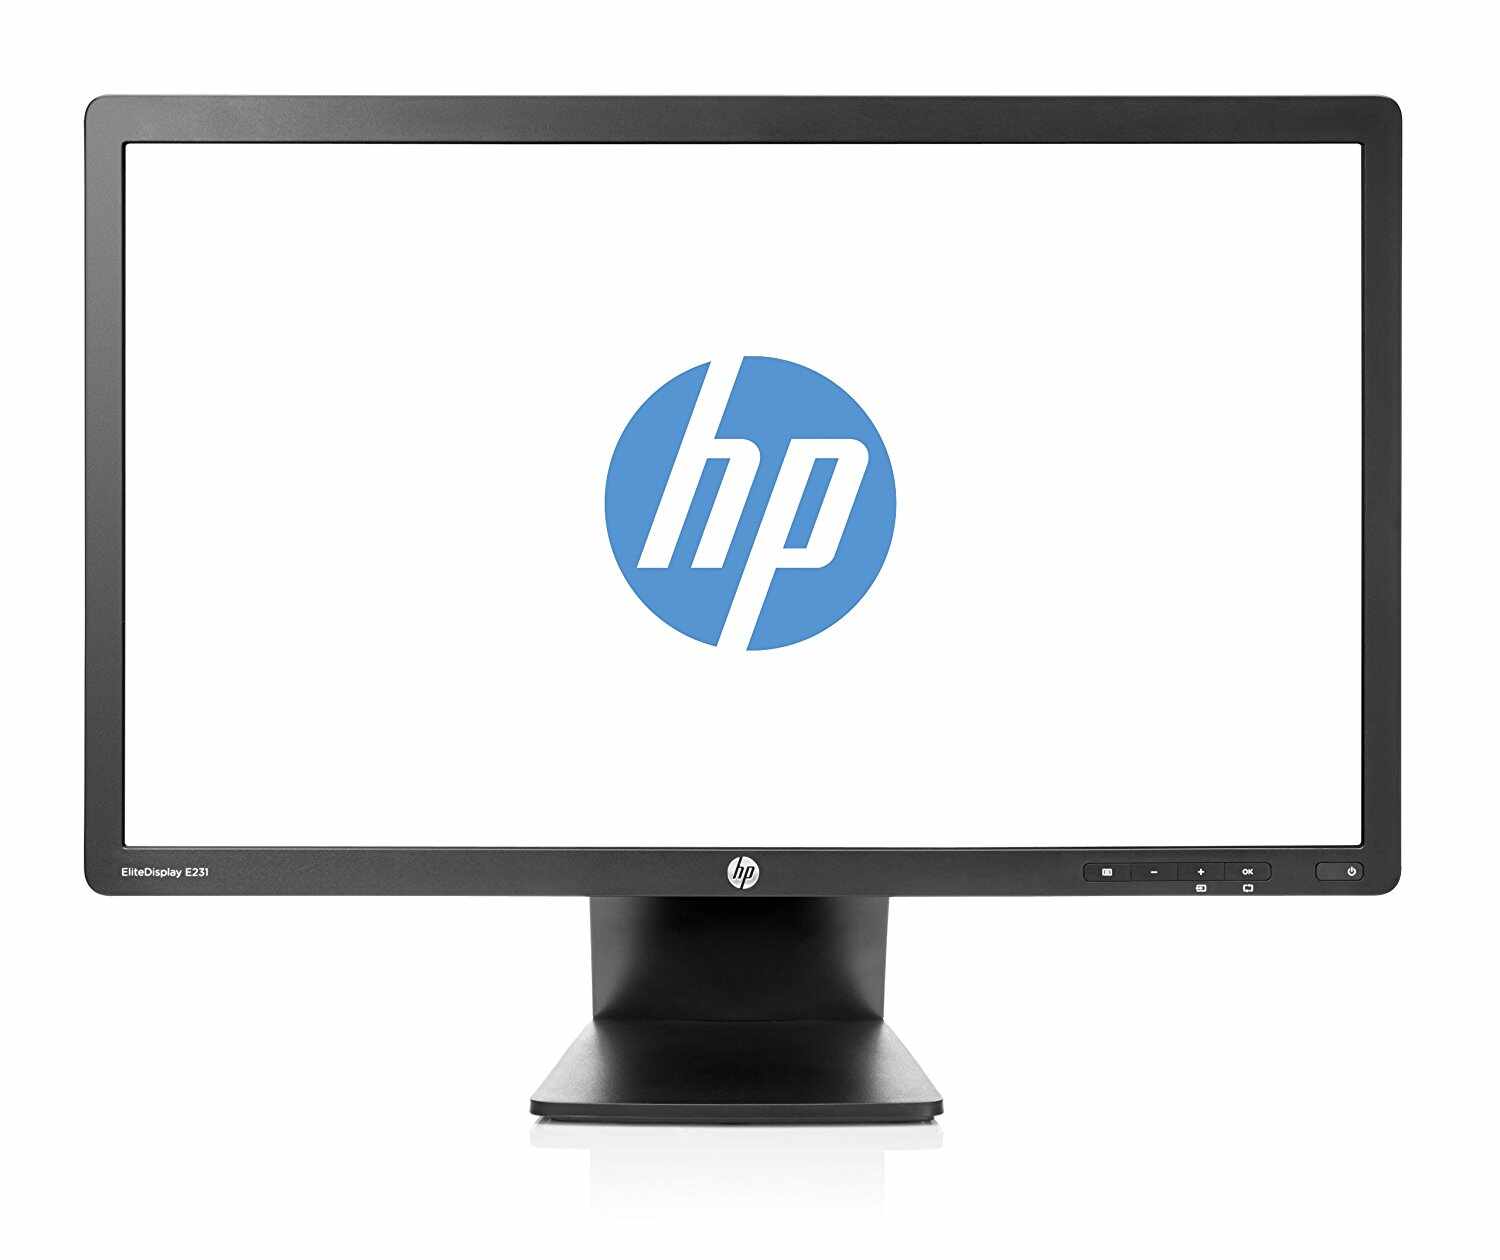 Monitor Refurbished HP E231, 23 Inch LED Full HD, DVI, VGA, USB, Widescreen